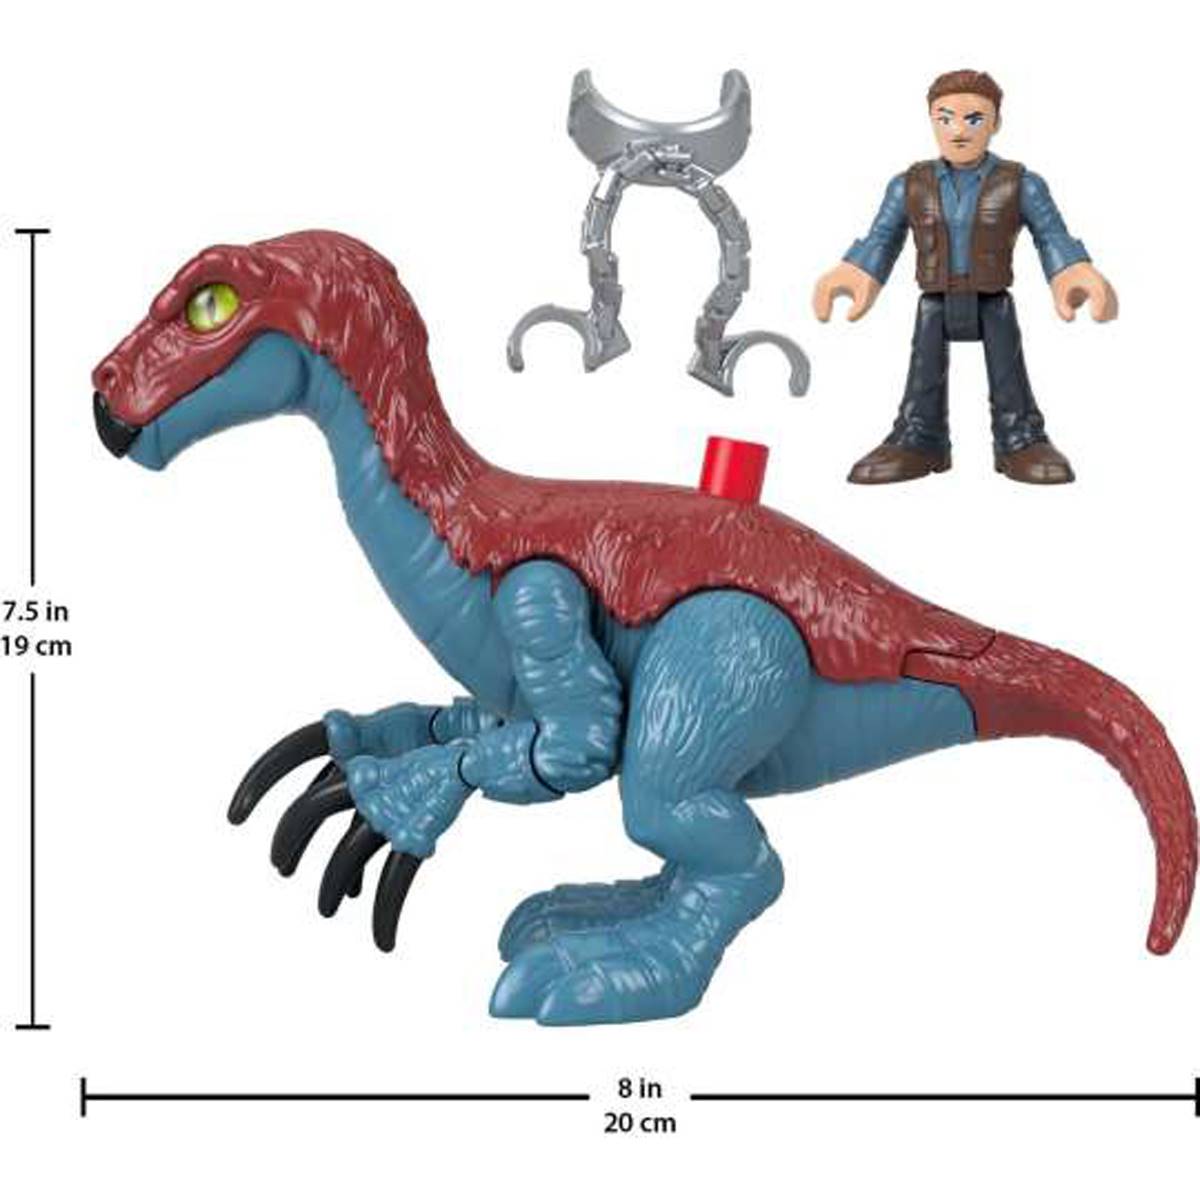 Fisher-Price(R) Imaginext(R) Jurassic World 3 Slasher Dino